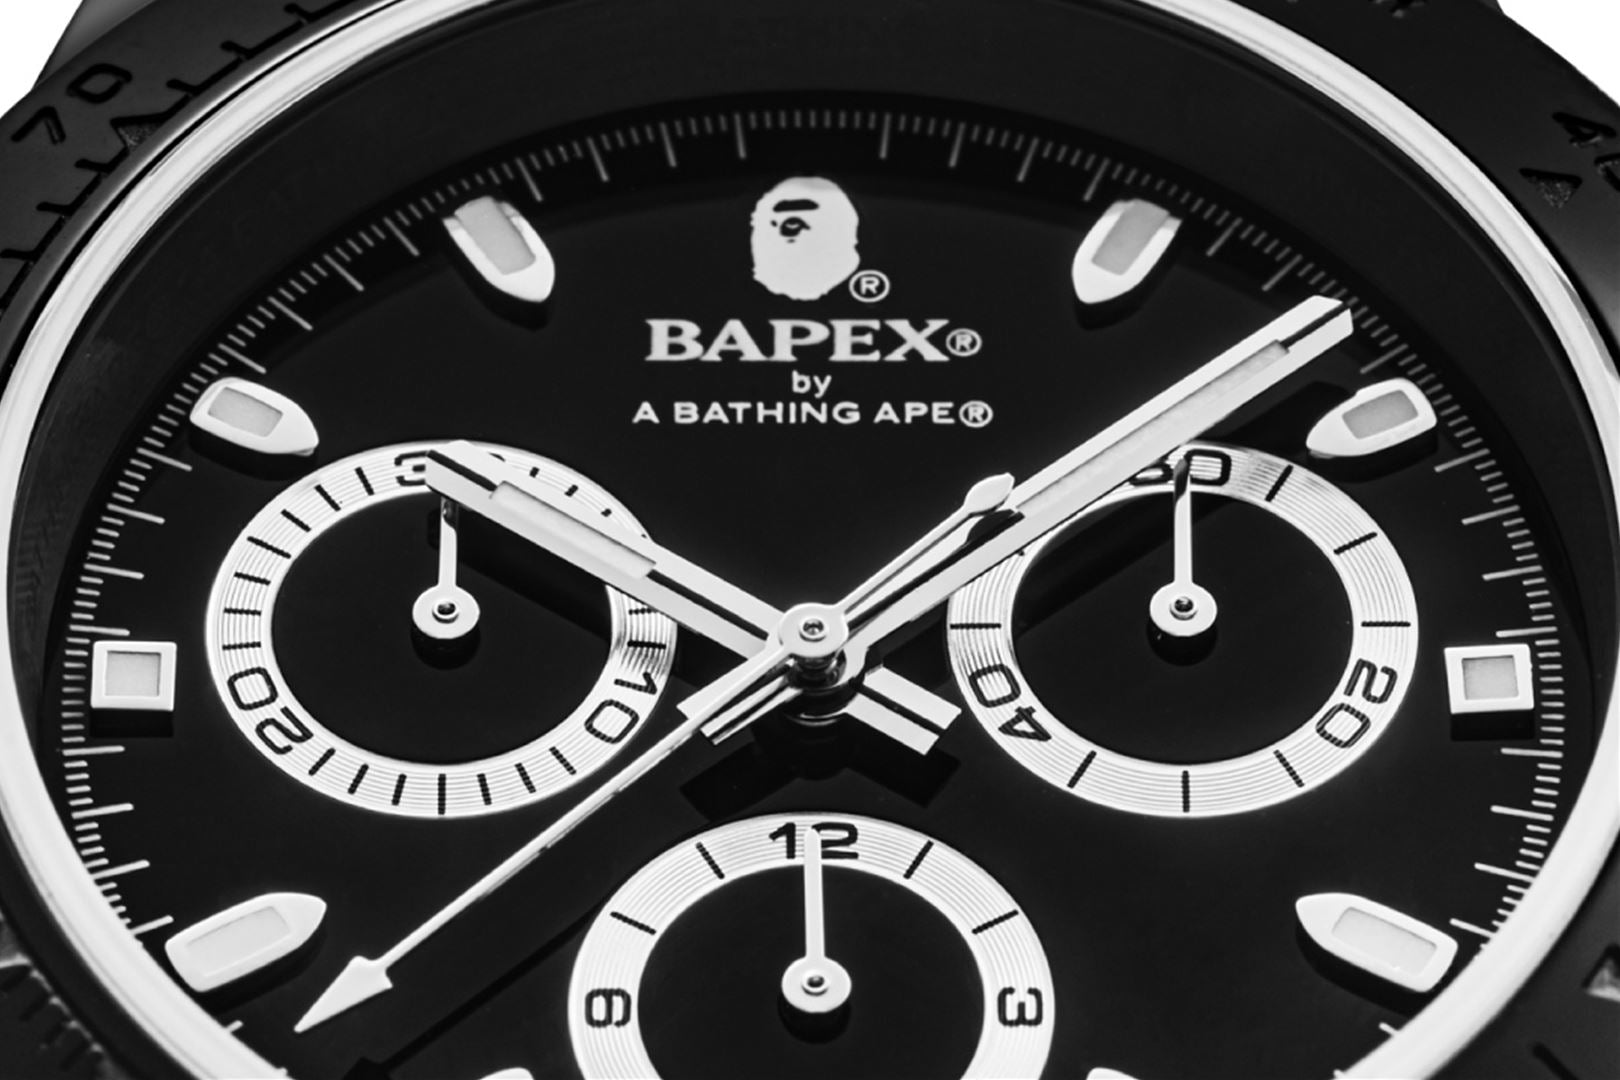 A Bathing Ape Type 1 Bapex Watch In Black | ModeSens